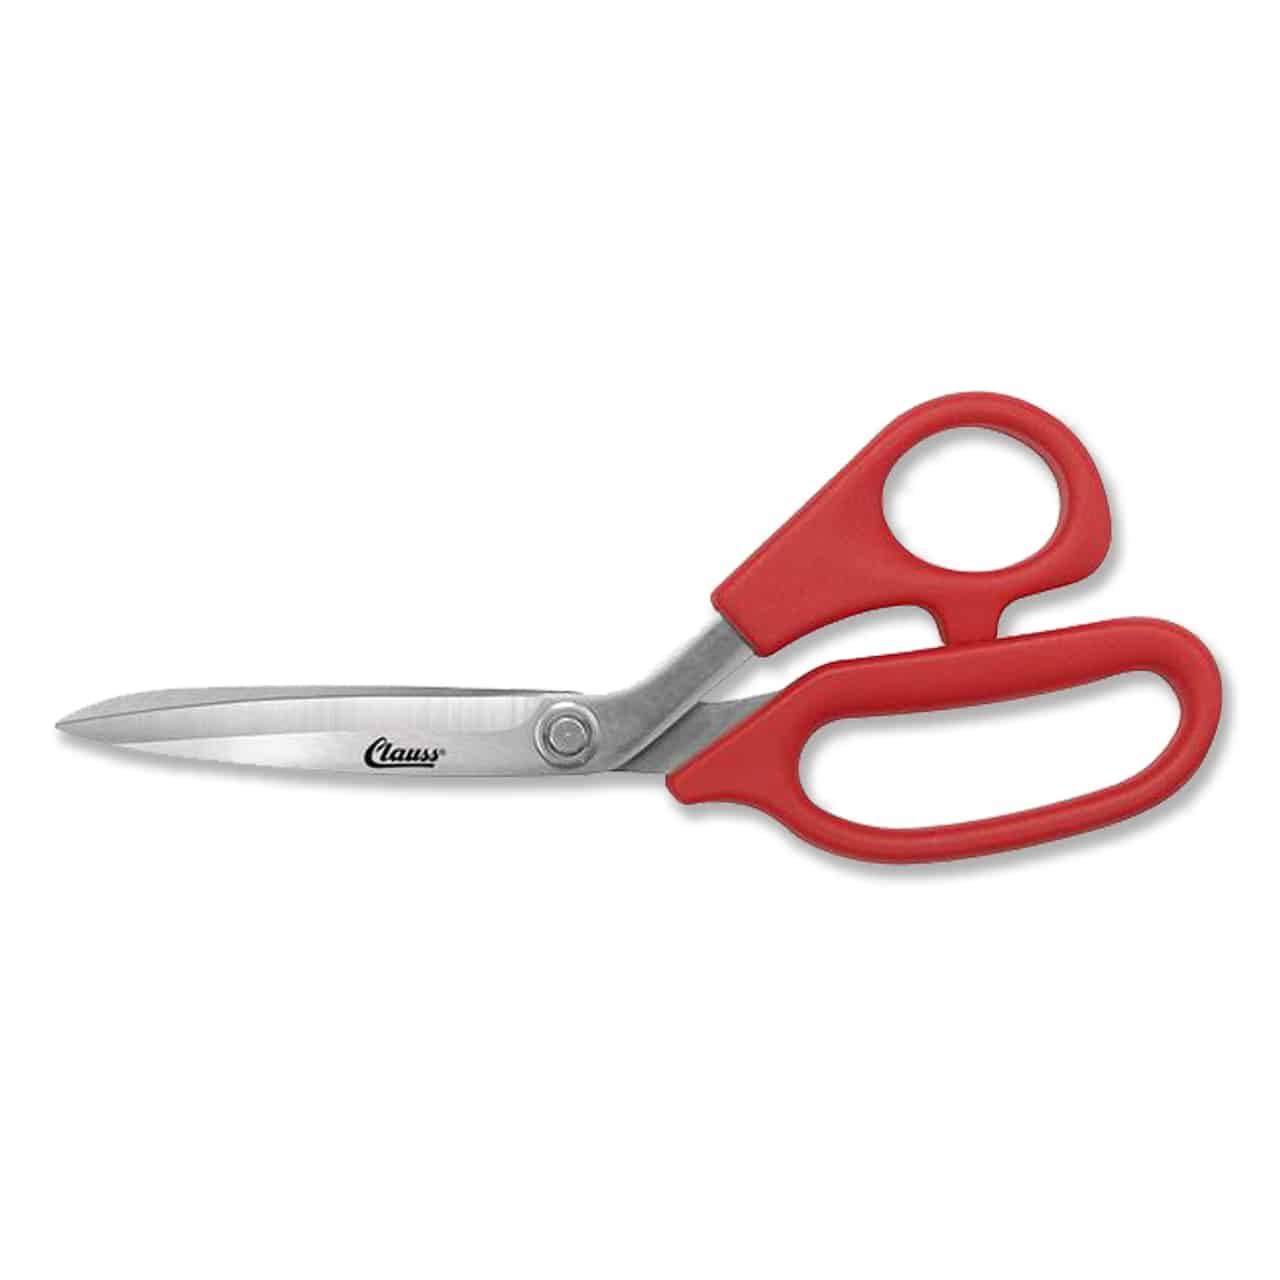 https://www.buckaroos.com/wp-content/uploads/T-63P_Clauss-8-Stainless-Steel-Bent-Scissors.jpg